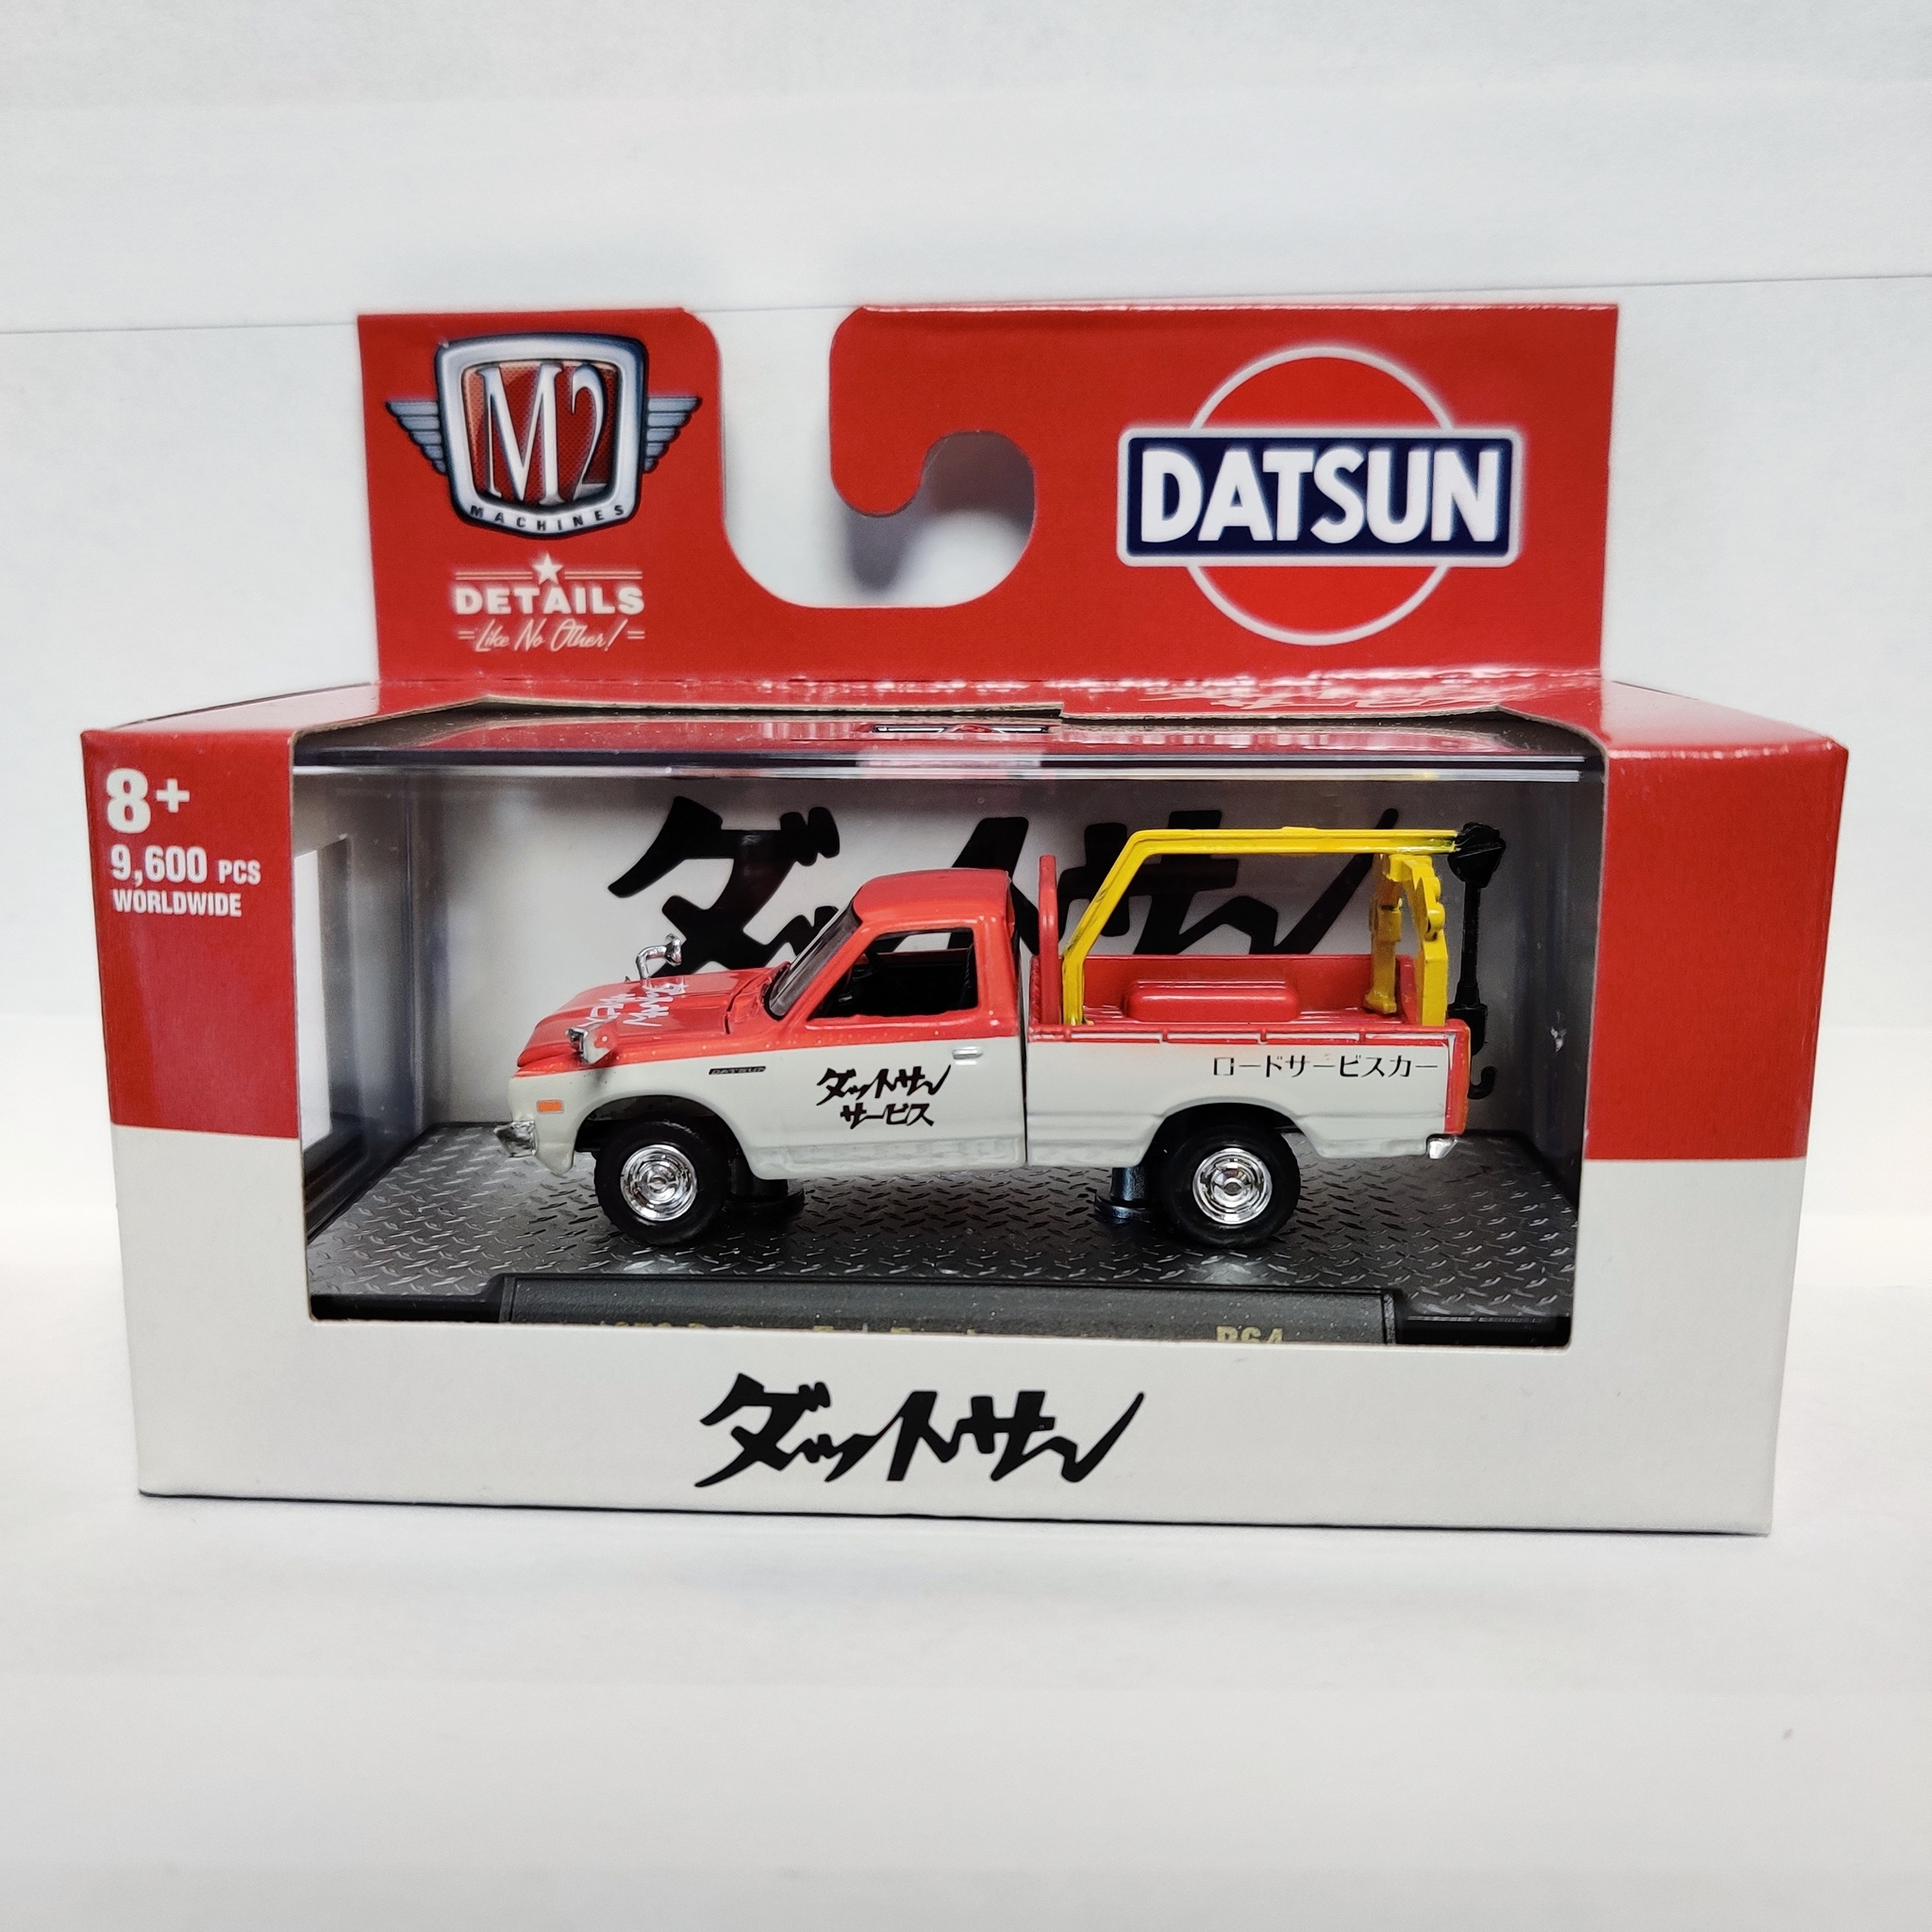 Skala 1/64 Datsun Tow Truck 78' "DATSUN" från M2 Machines, Lim.Ed 9600 ex